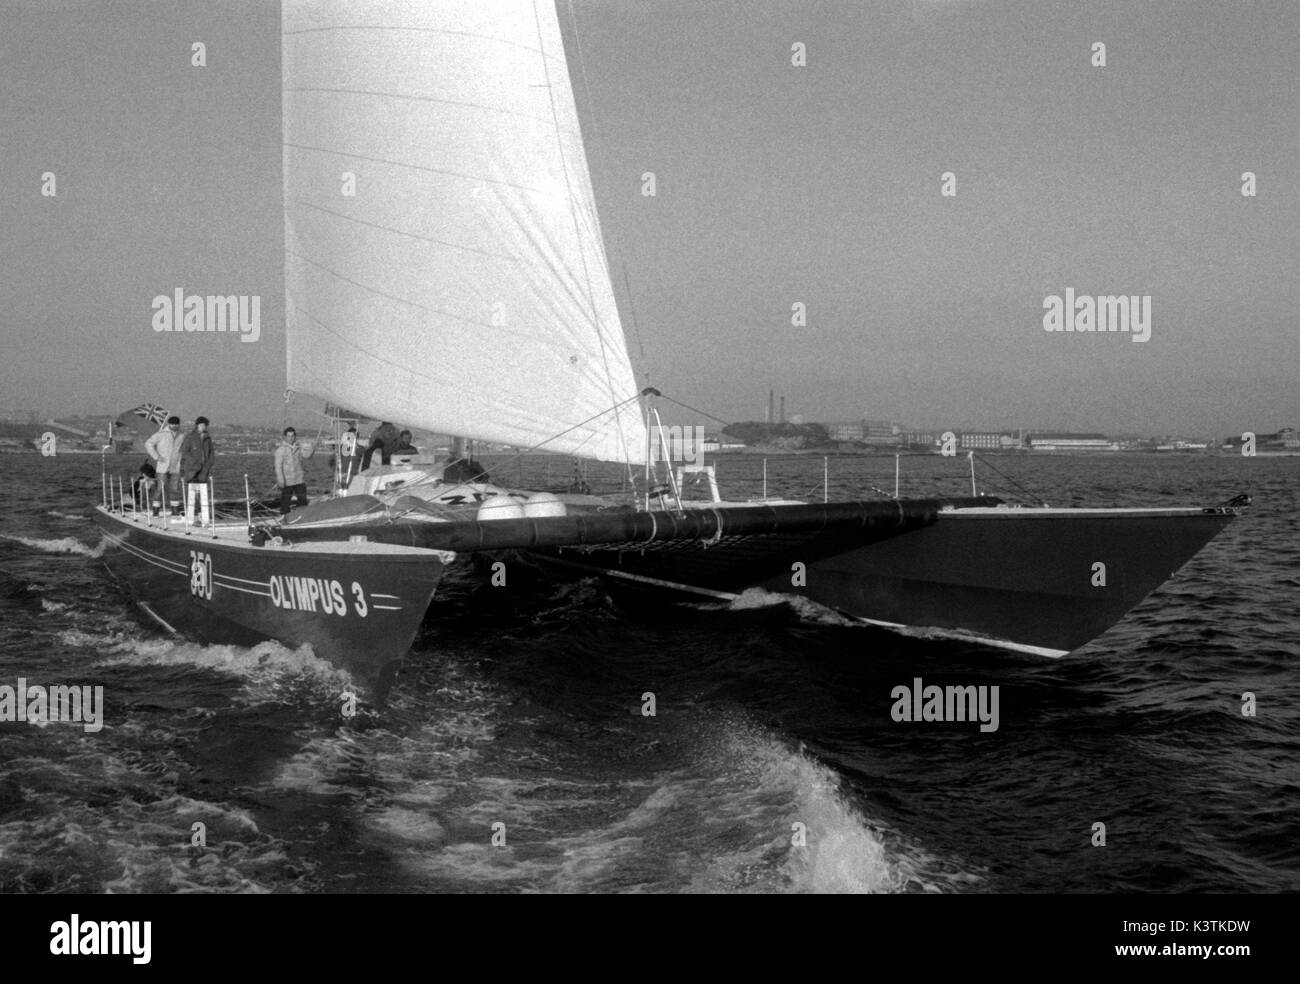 AJAXNETPHOTO. NOVEMBER, 1982. PLYMOUTH, ENGLAND. - ROUTE DU RHUM RACE - OLYMPUS 3 CATAMARAN SKIPPERED BY ROBIN KNOX JOHNSTON HEADS FOR THE START AT ST.MALO, FRANCE. PHOTO:JONATHAN EASTLAND/AJAX REF:821007 53 Stock Photo